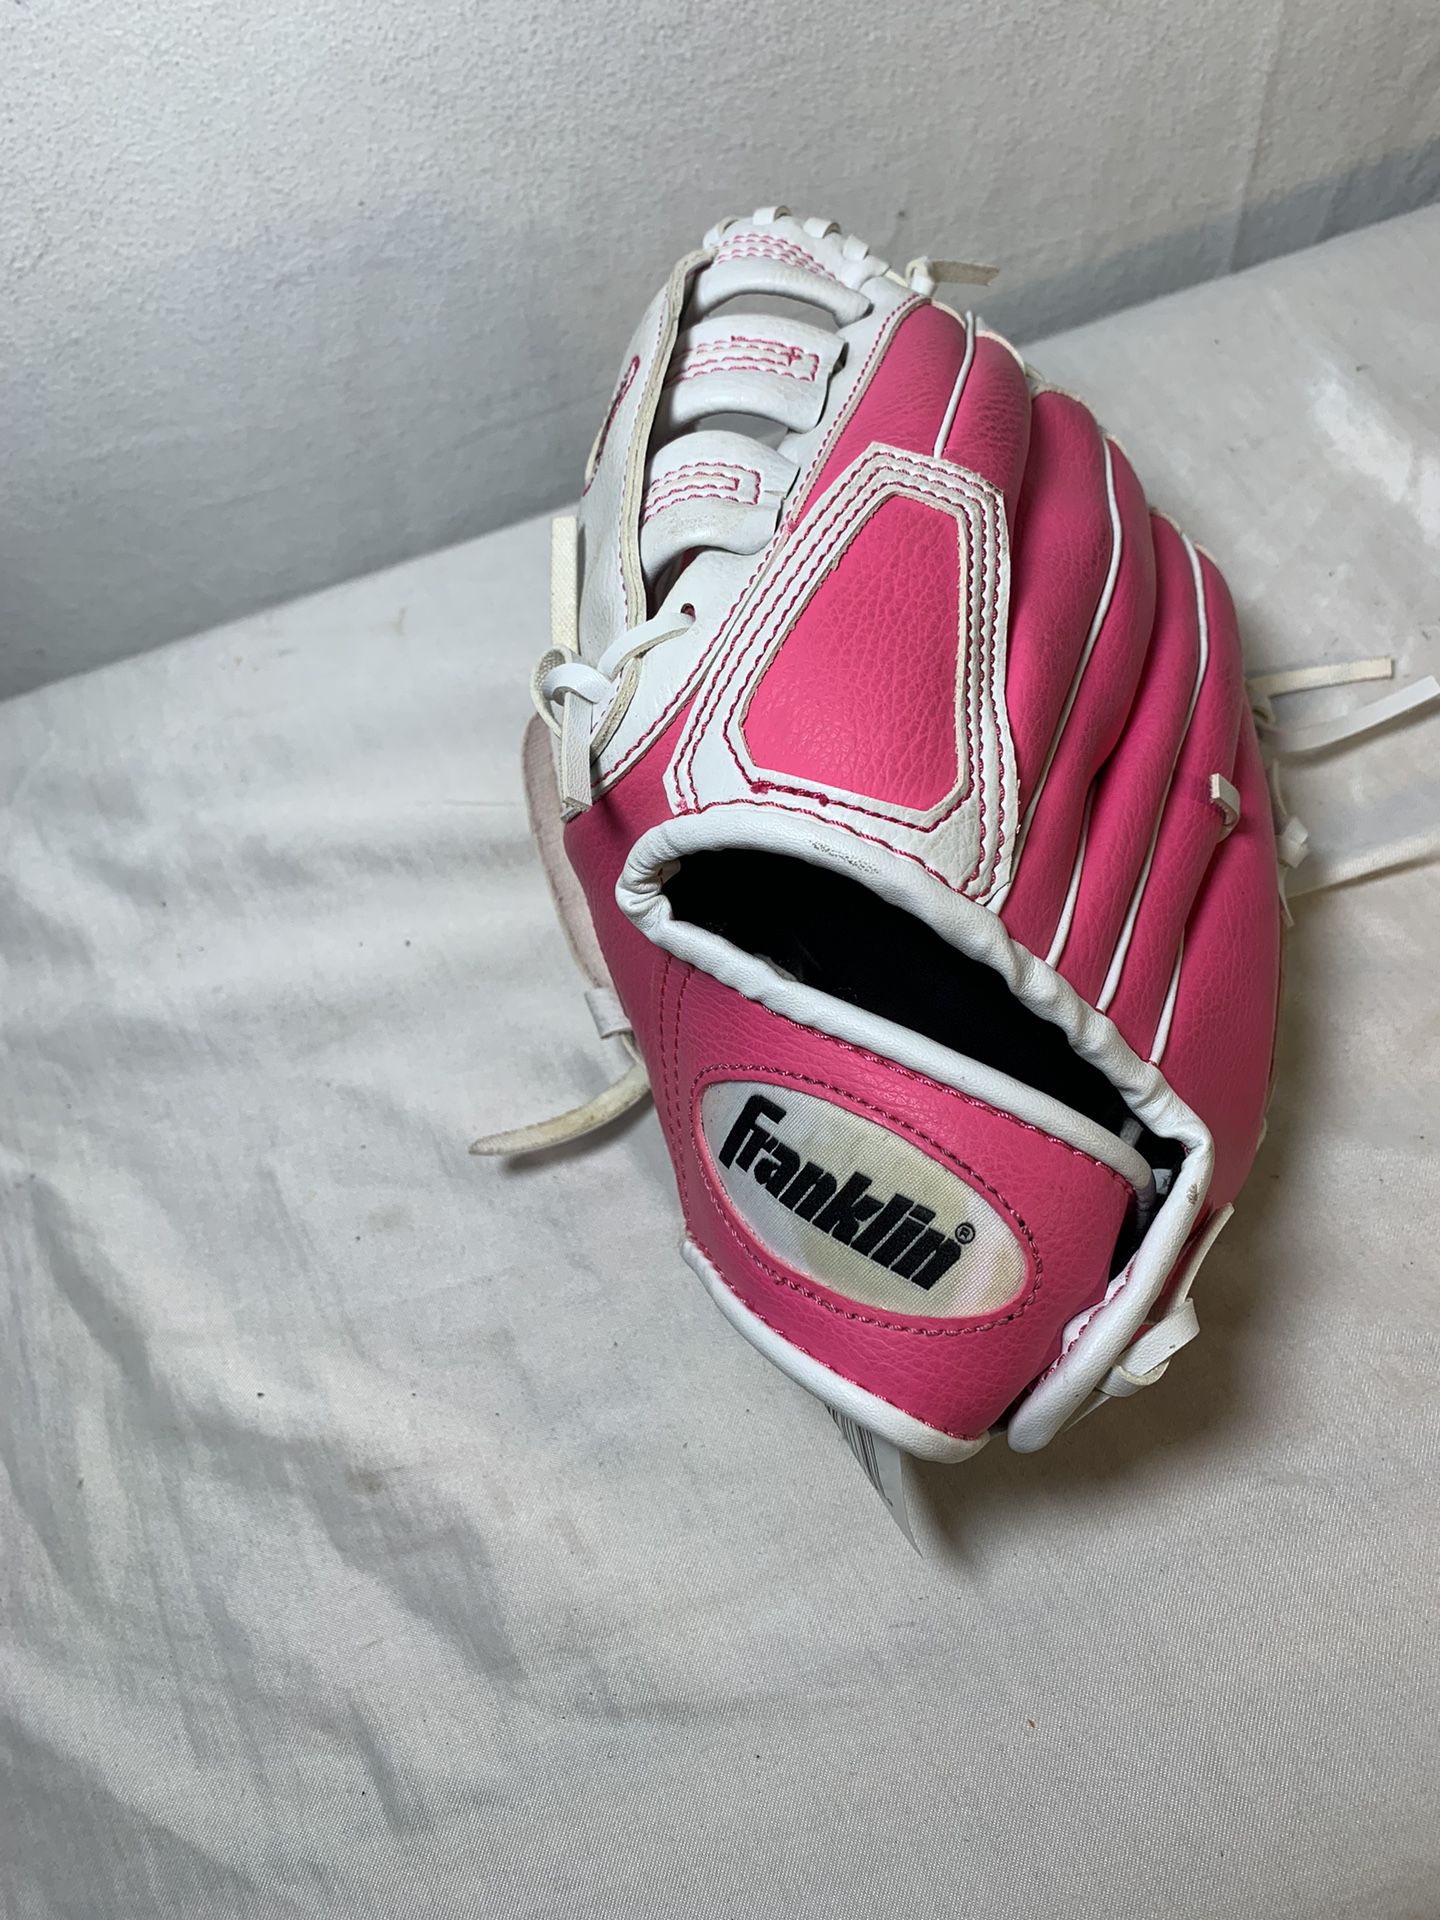 "Franklin Baseball Glove RTP II 10 1/2"" Left Handed Throw Pink & White "